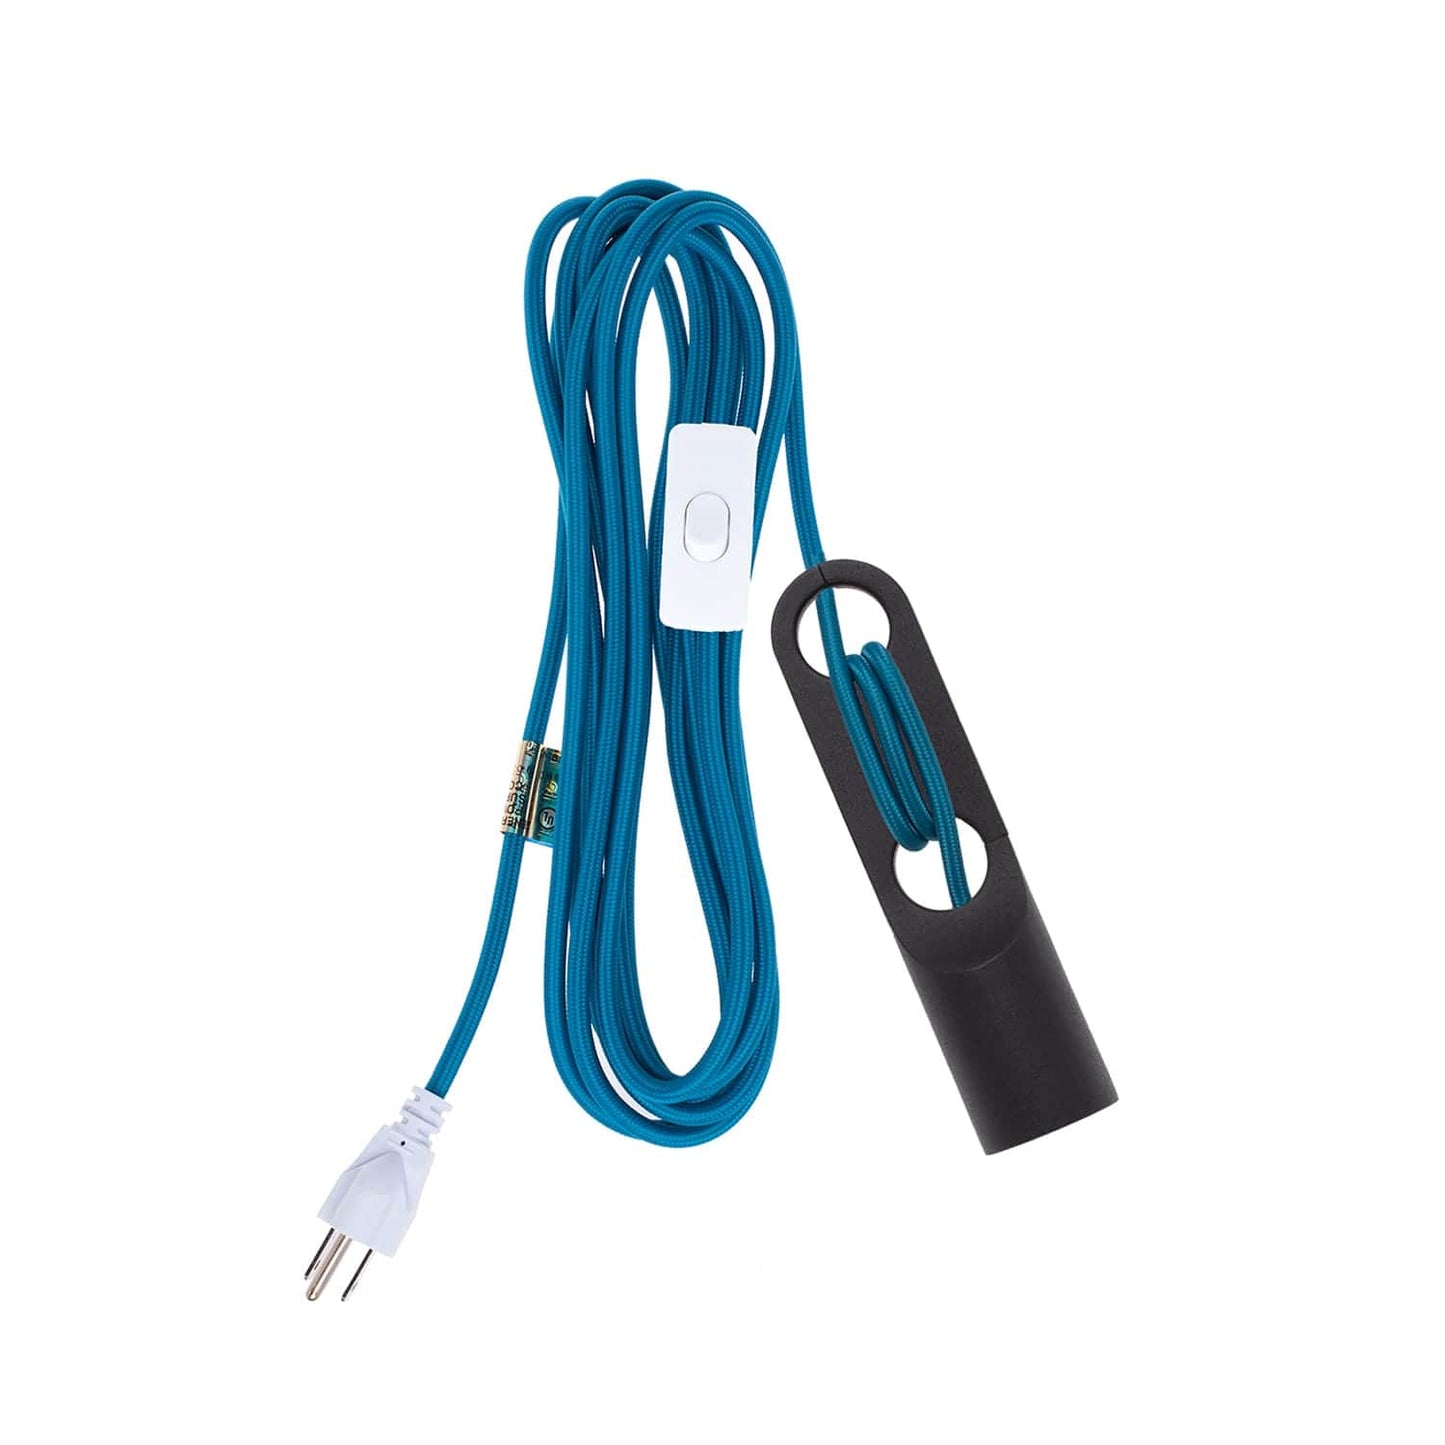 Wrap Black Chroma Plug-In Cord Set